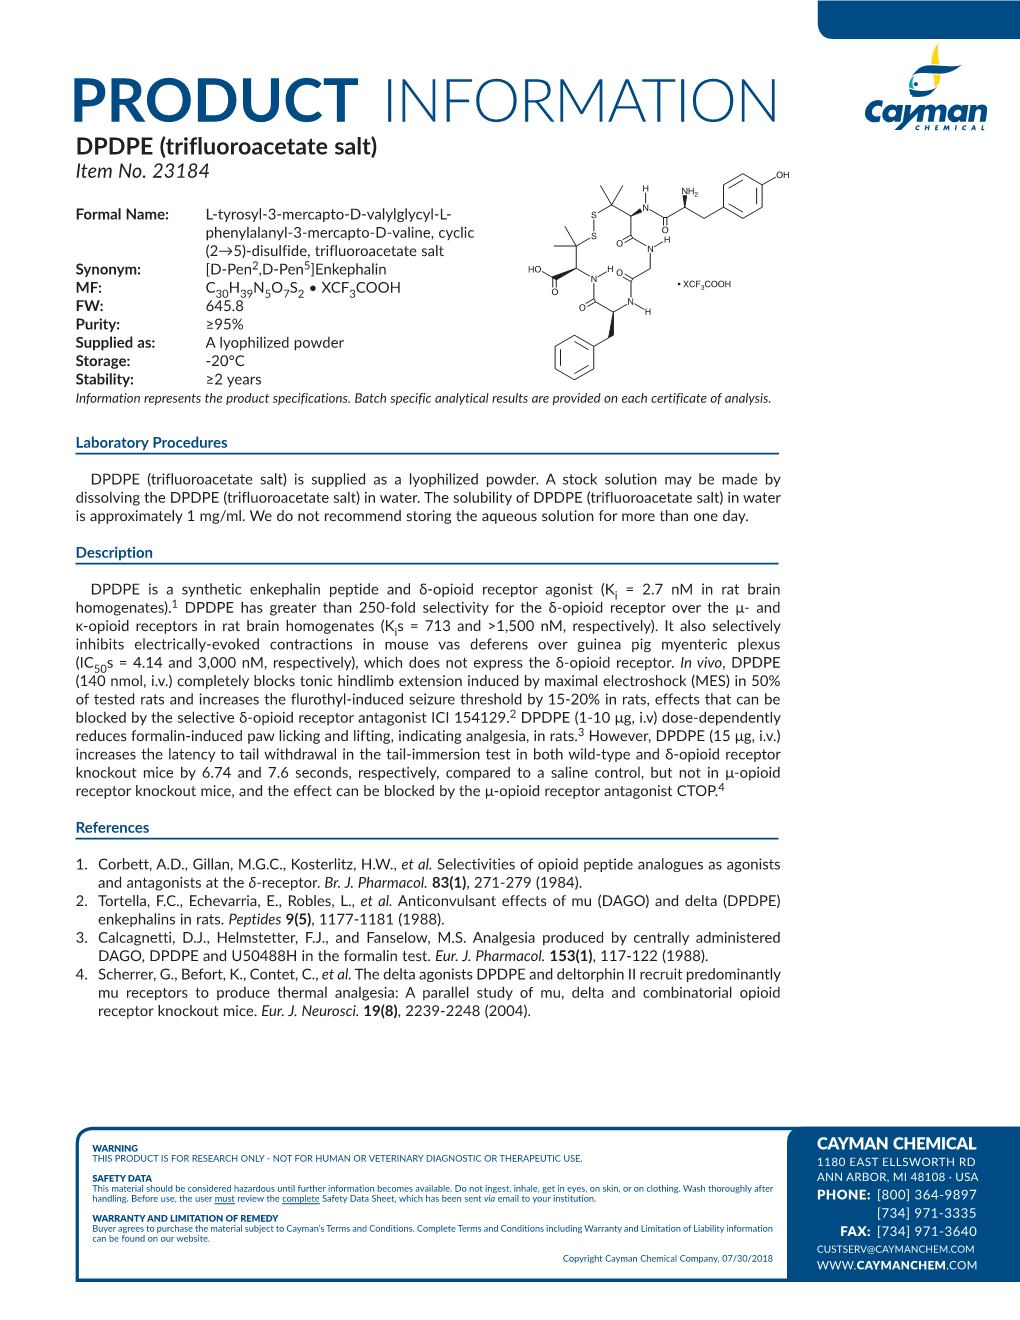 PRODUCT INFORMATION DPDPE (Trifluoroacetate Salt) Item No